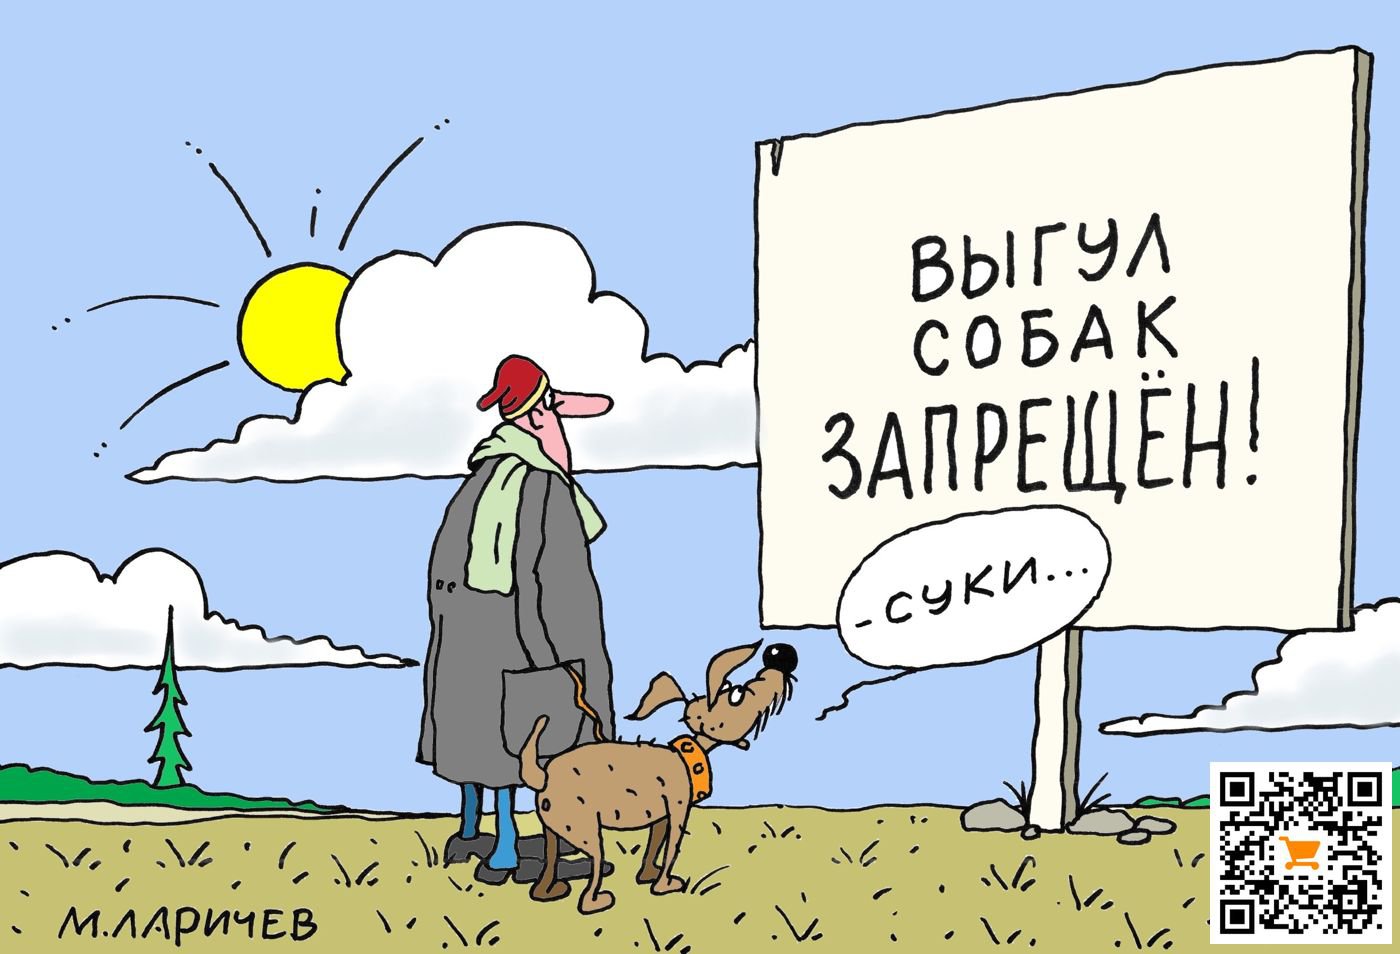 Карикатура "Свежий воздух", Михаил Ларичев